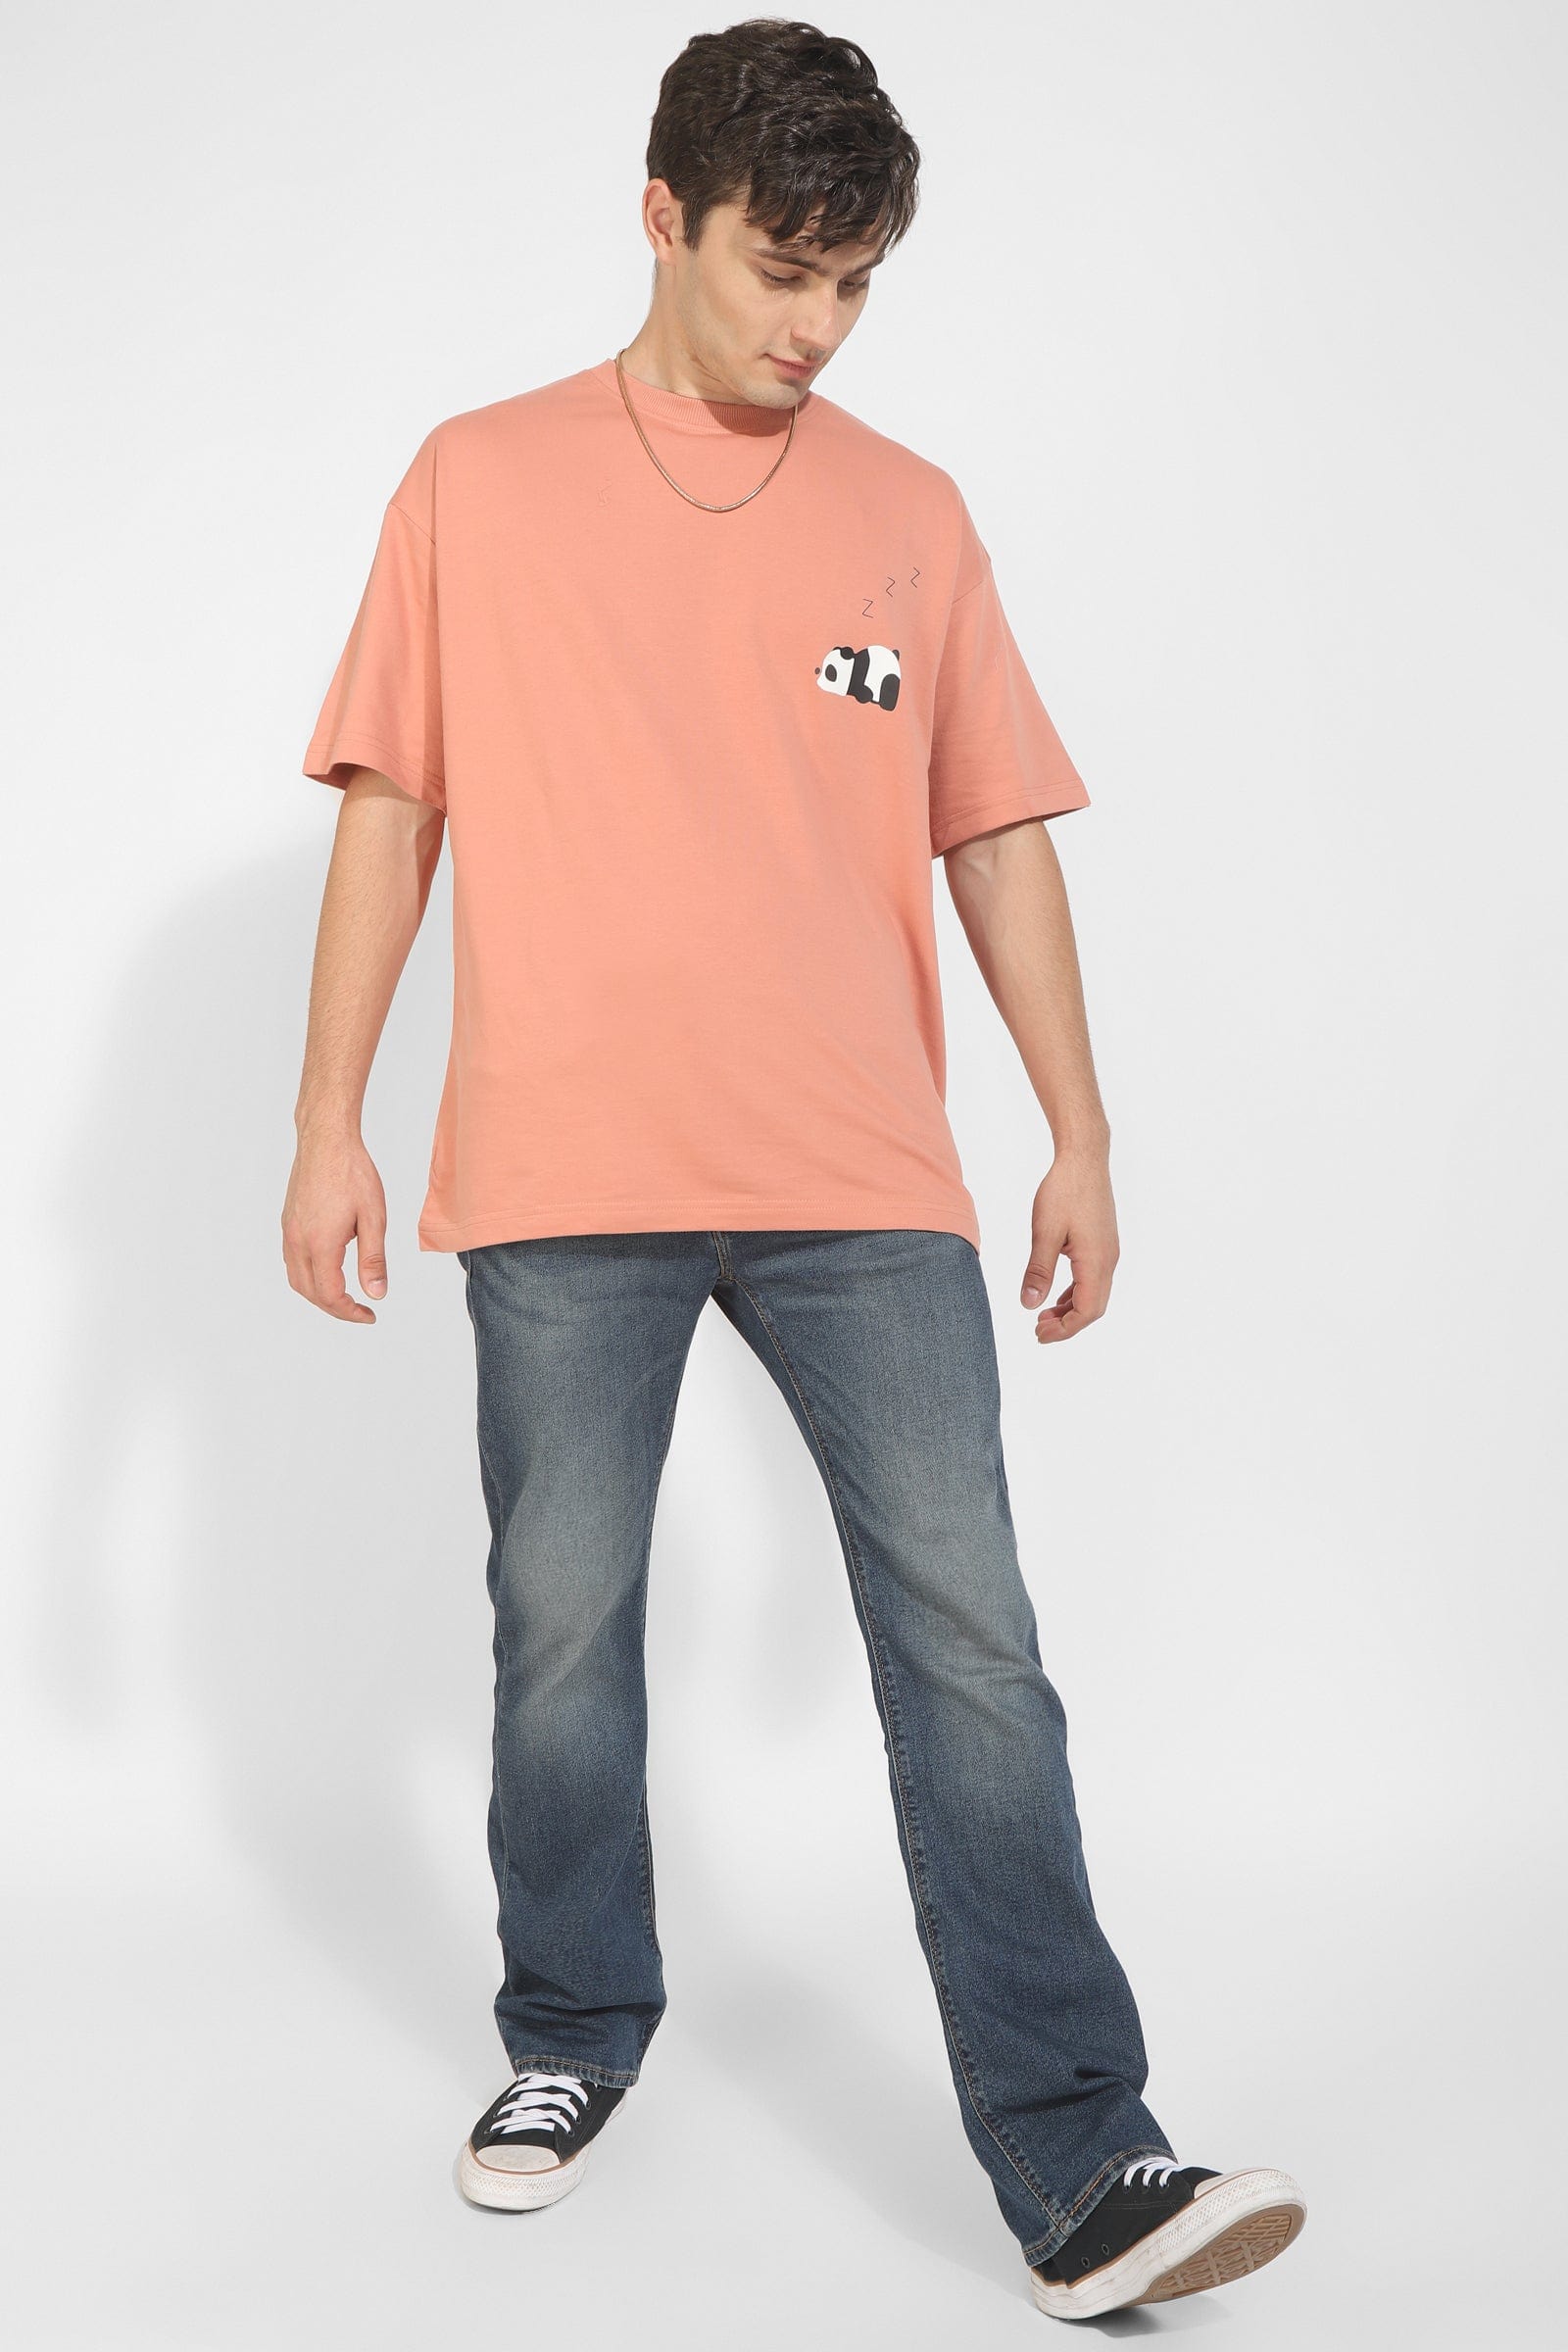 Snoozy Panda Peach Oversized Unisex T-Shirt By Purple Mango